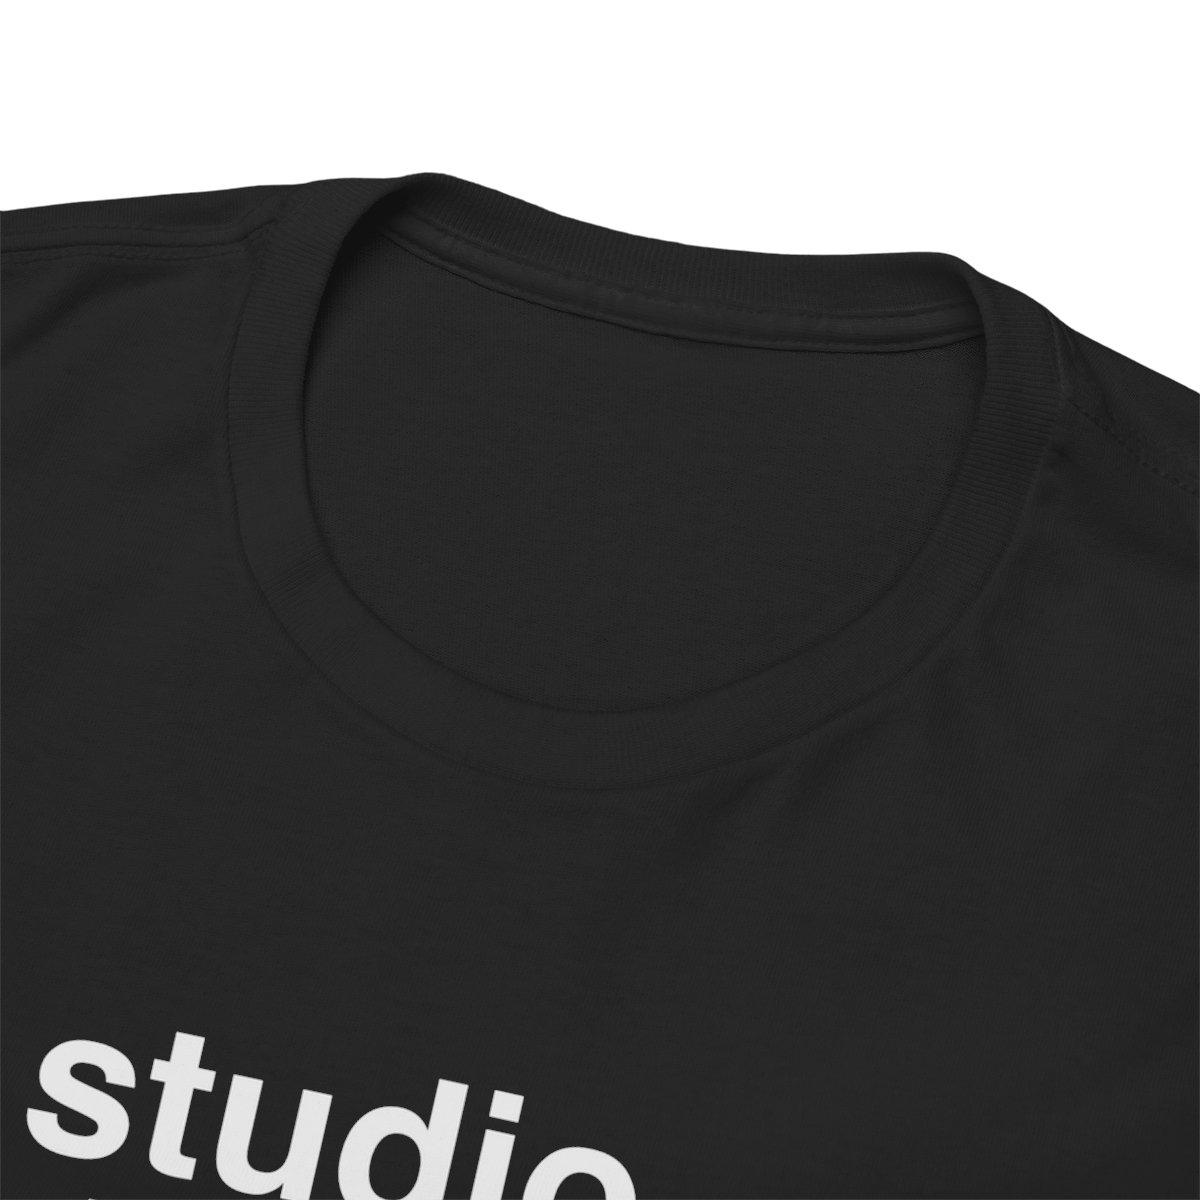 Studio Destruct DARK T-Shirt product thumbnail image